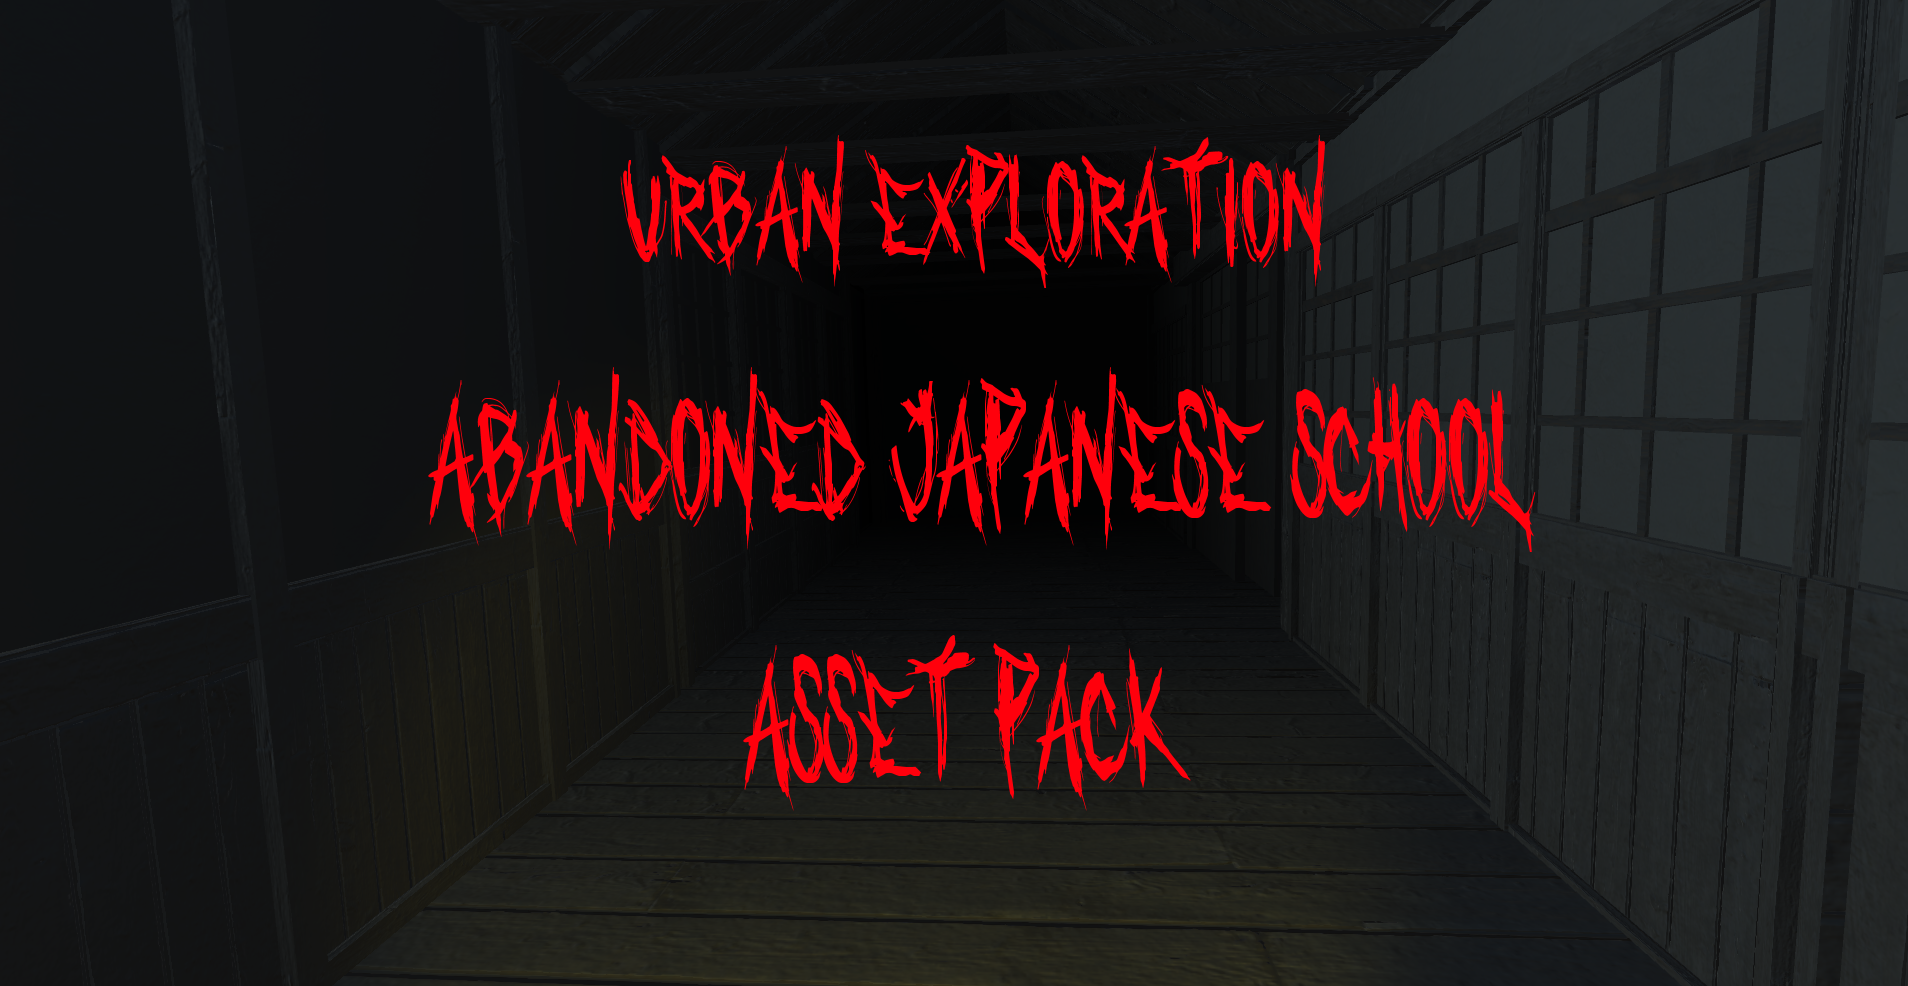 abandoned Japanese school asset pack